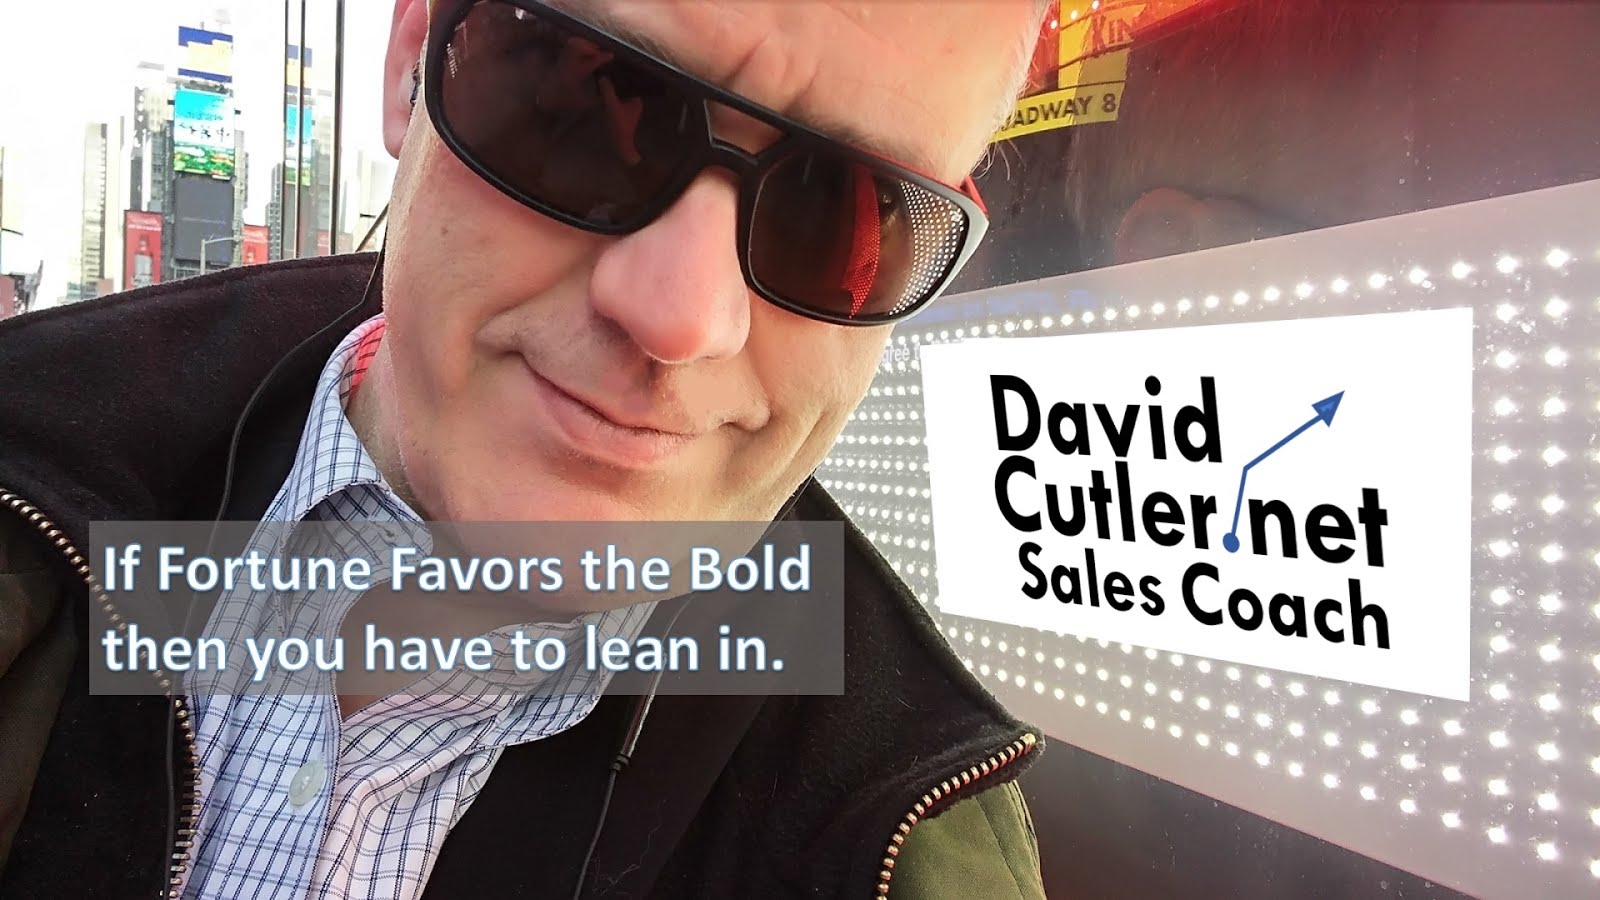 David Cutler Sales Coach